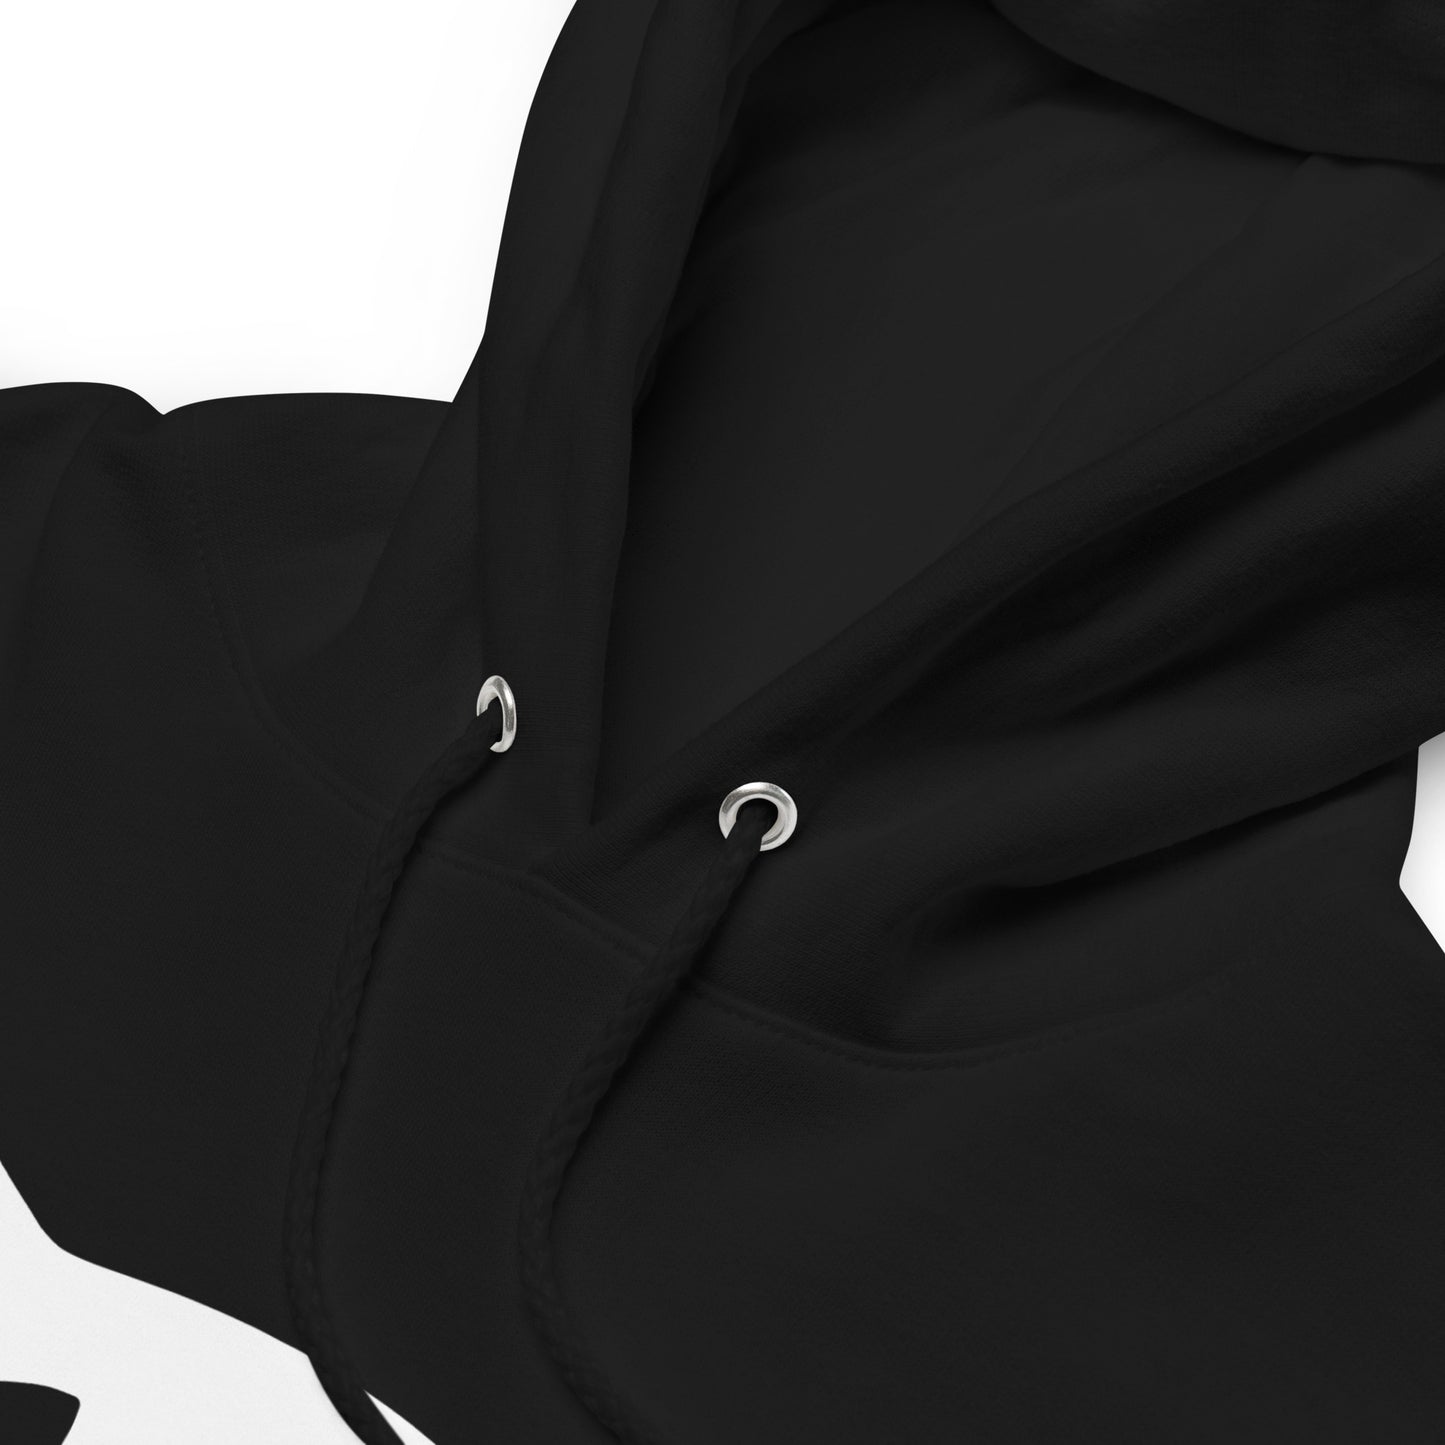 Black and White Unisex fleece hoodie